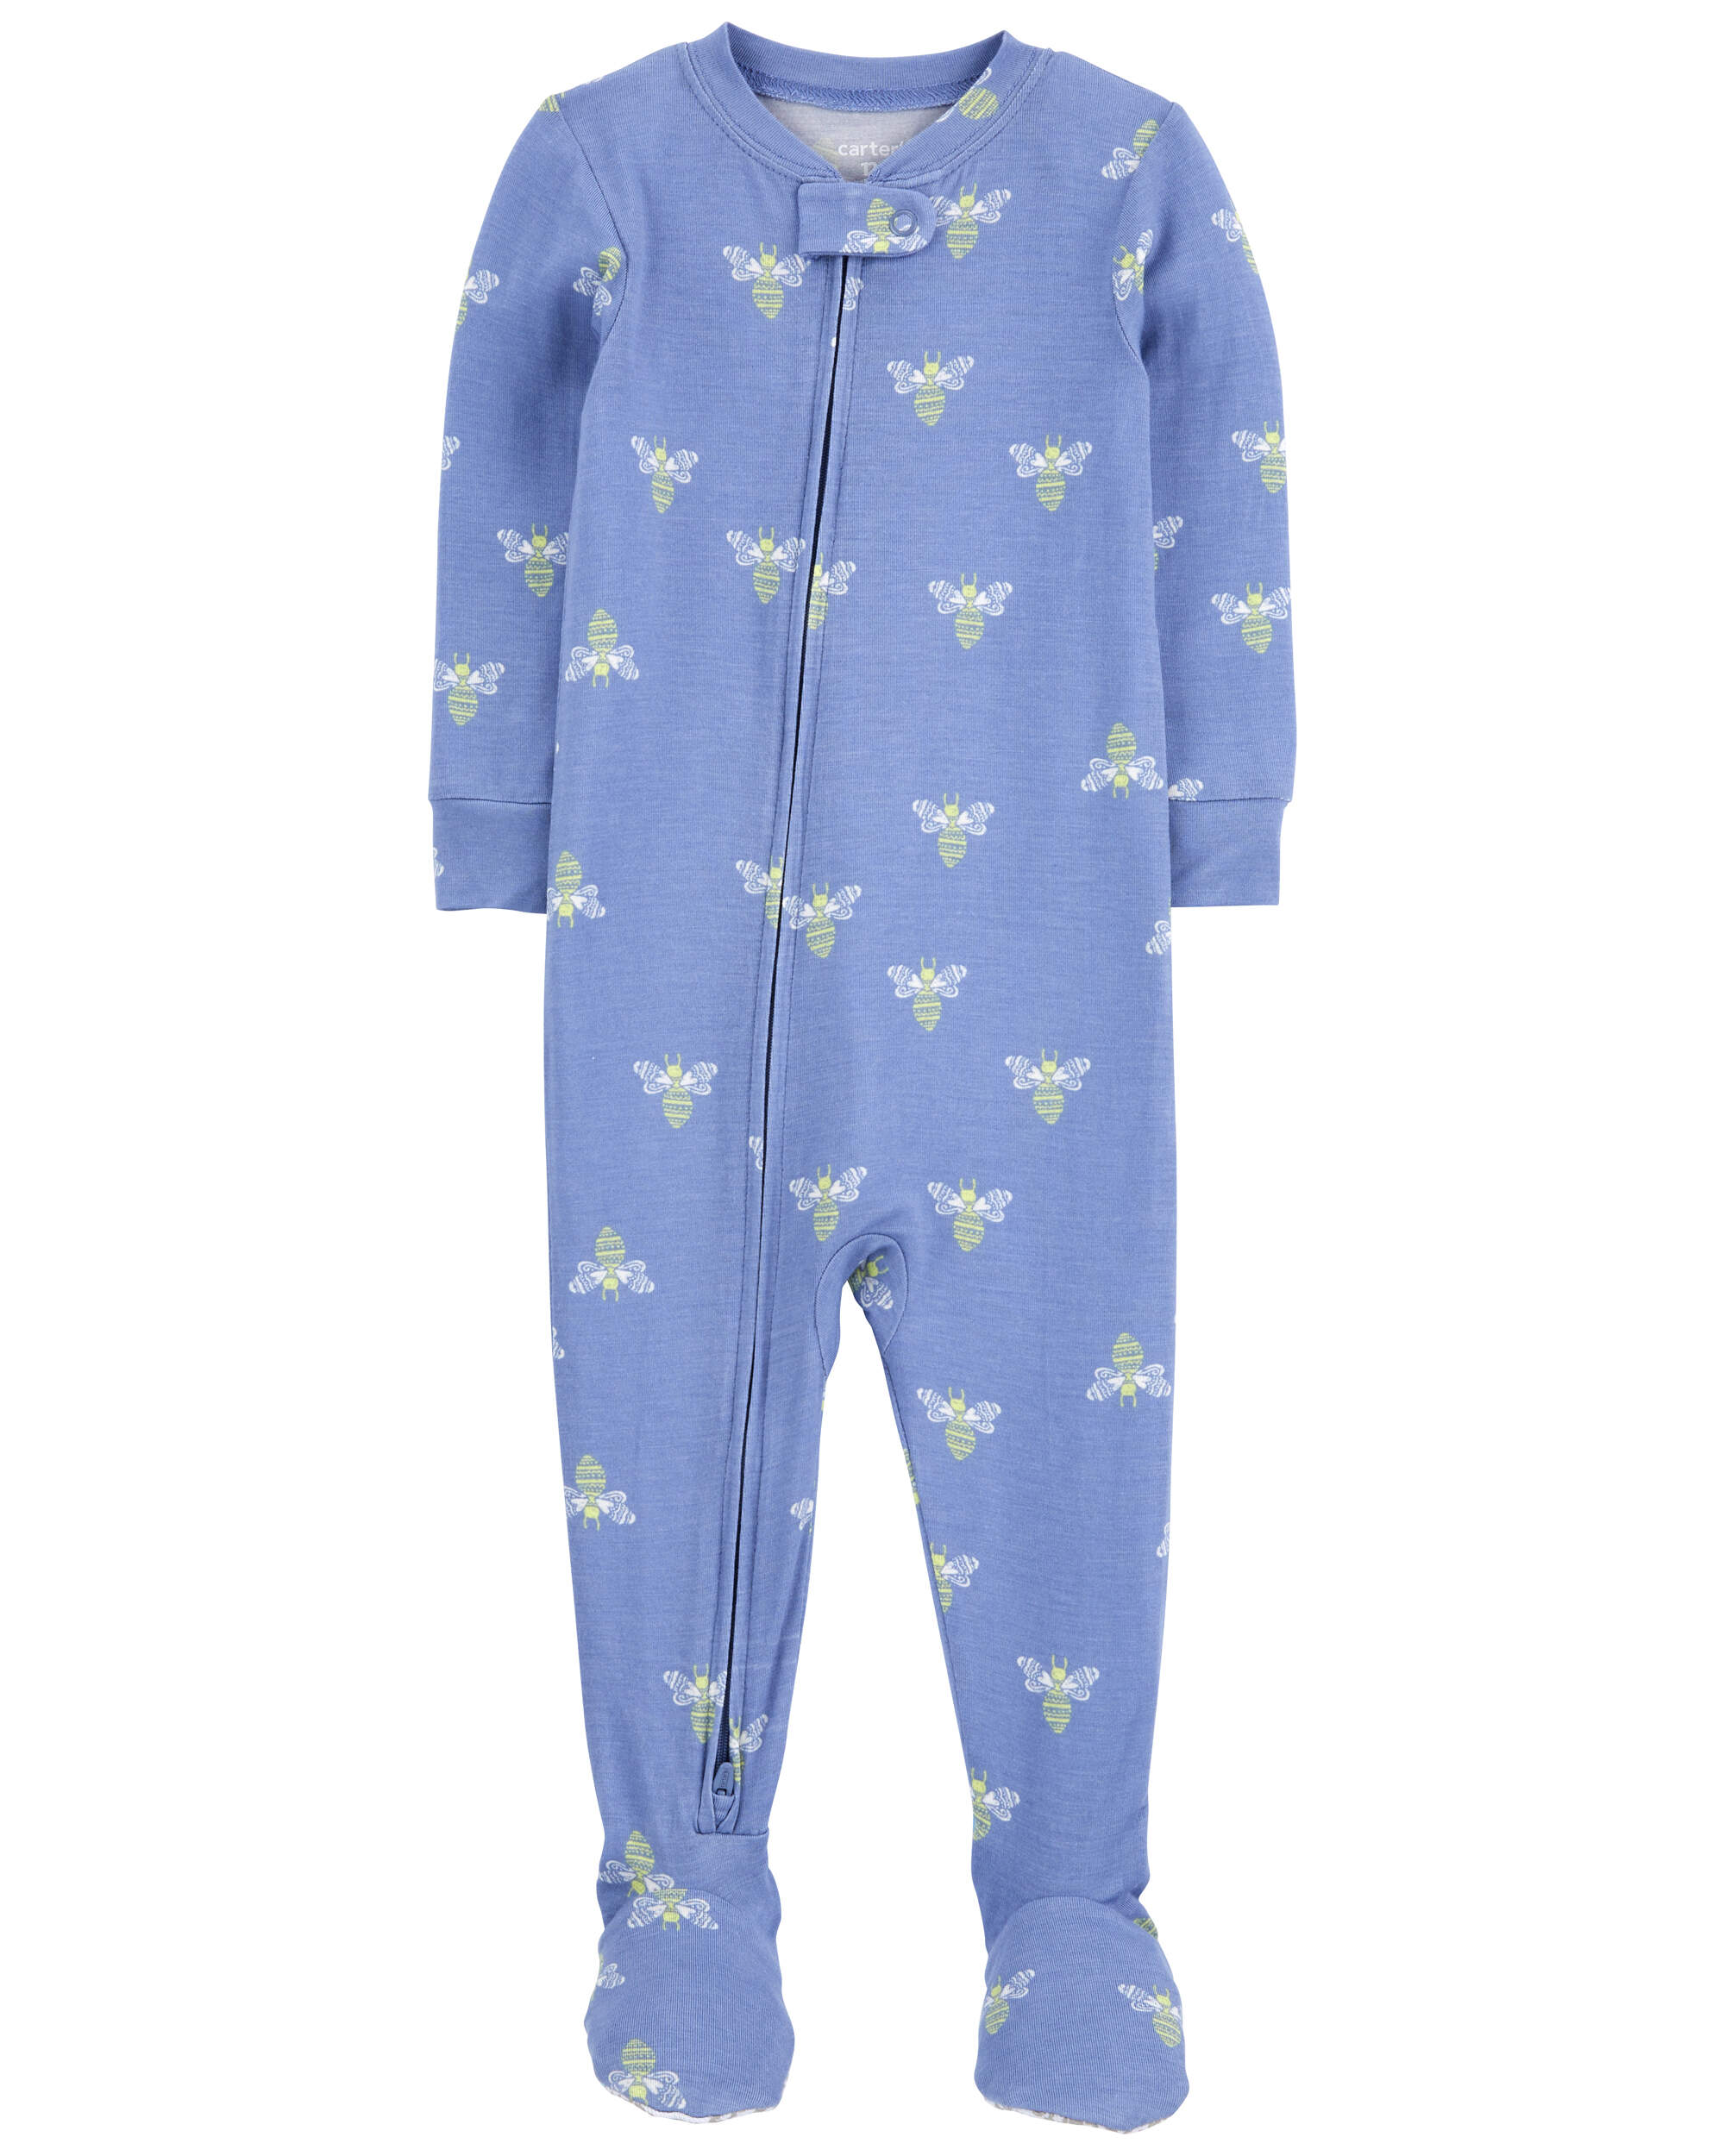 Baby 1-Piece Bee Print PurelySoft Footie Pyjamas